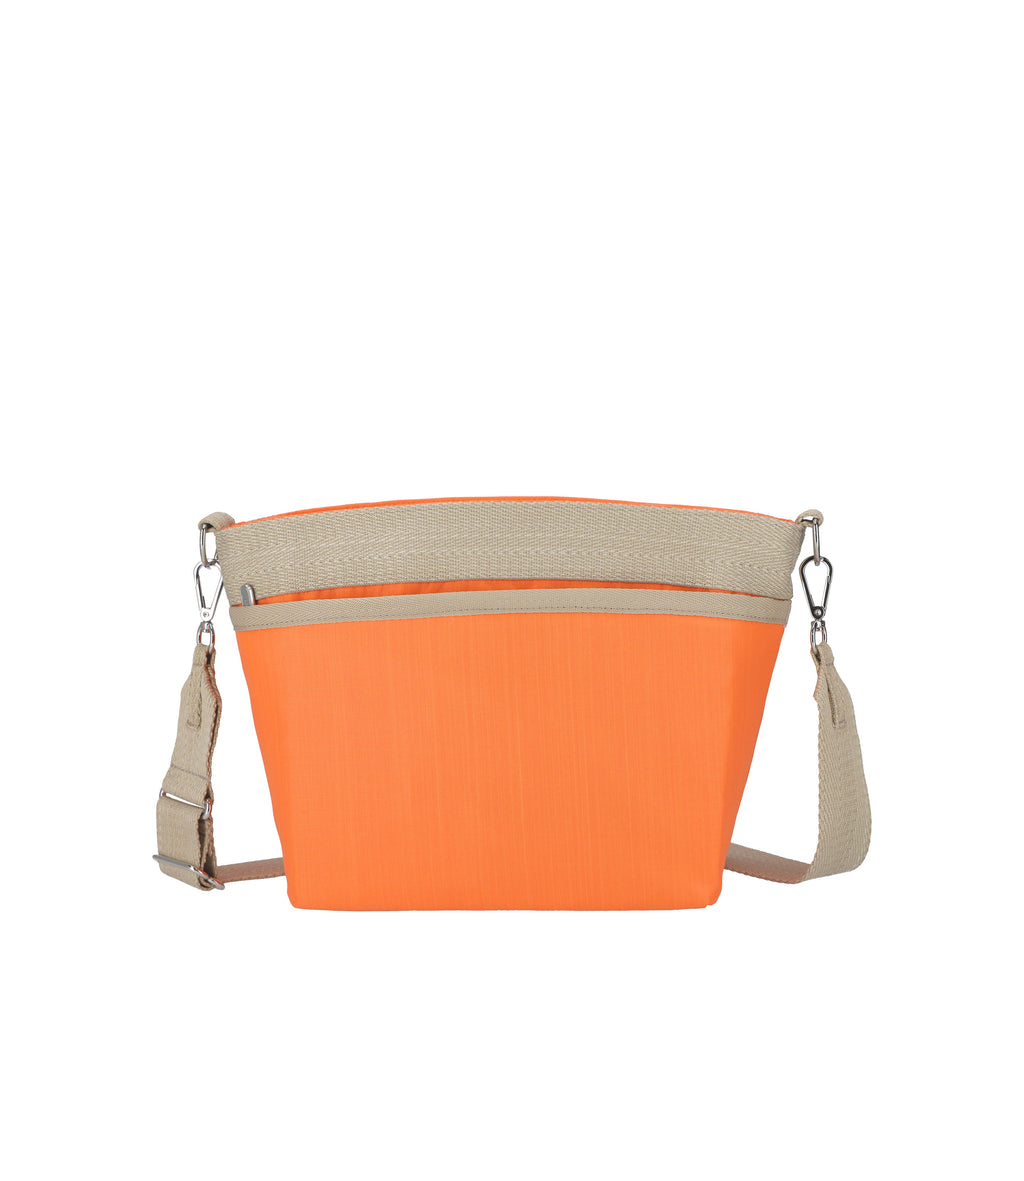 Lesportsac Large Bucket Tote - Tangerine/Latte